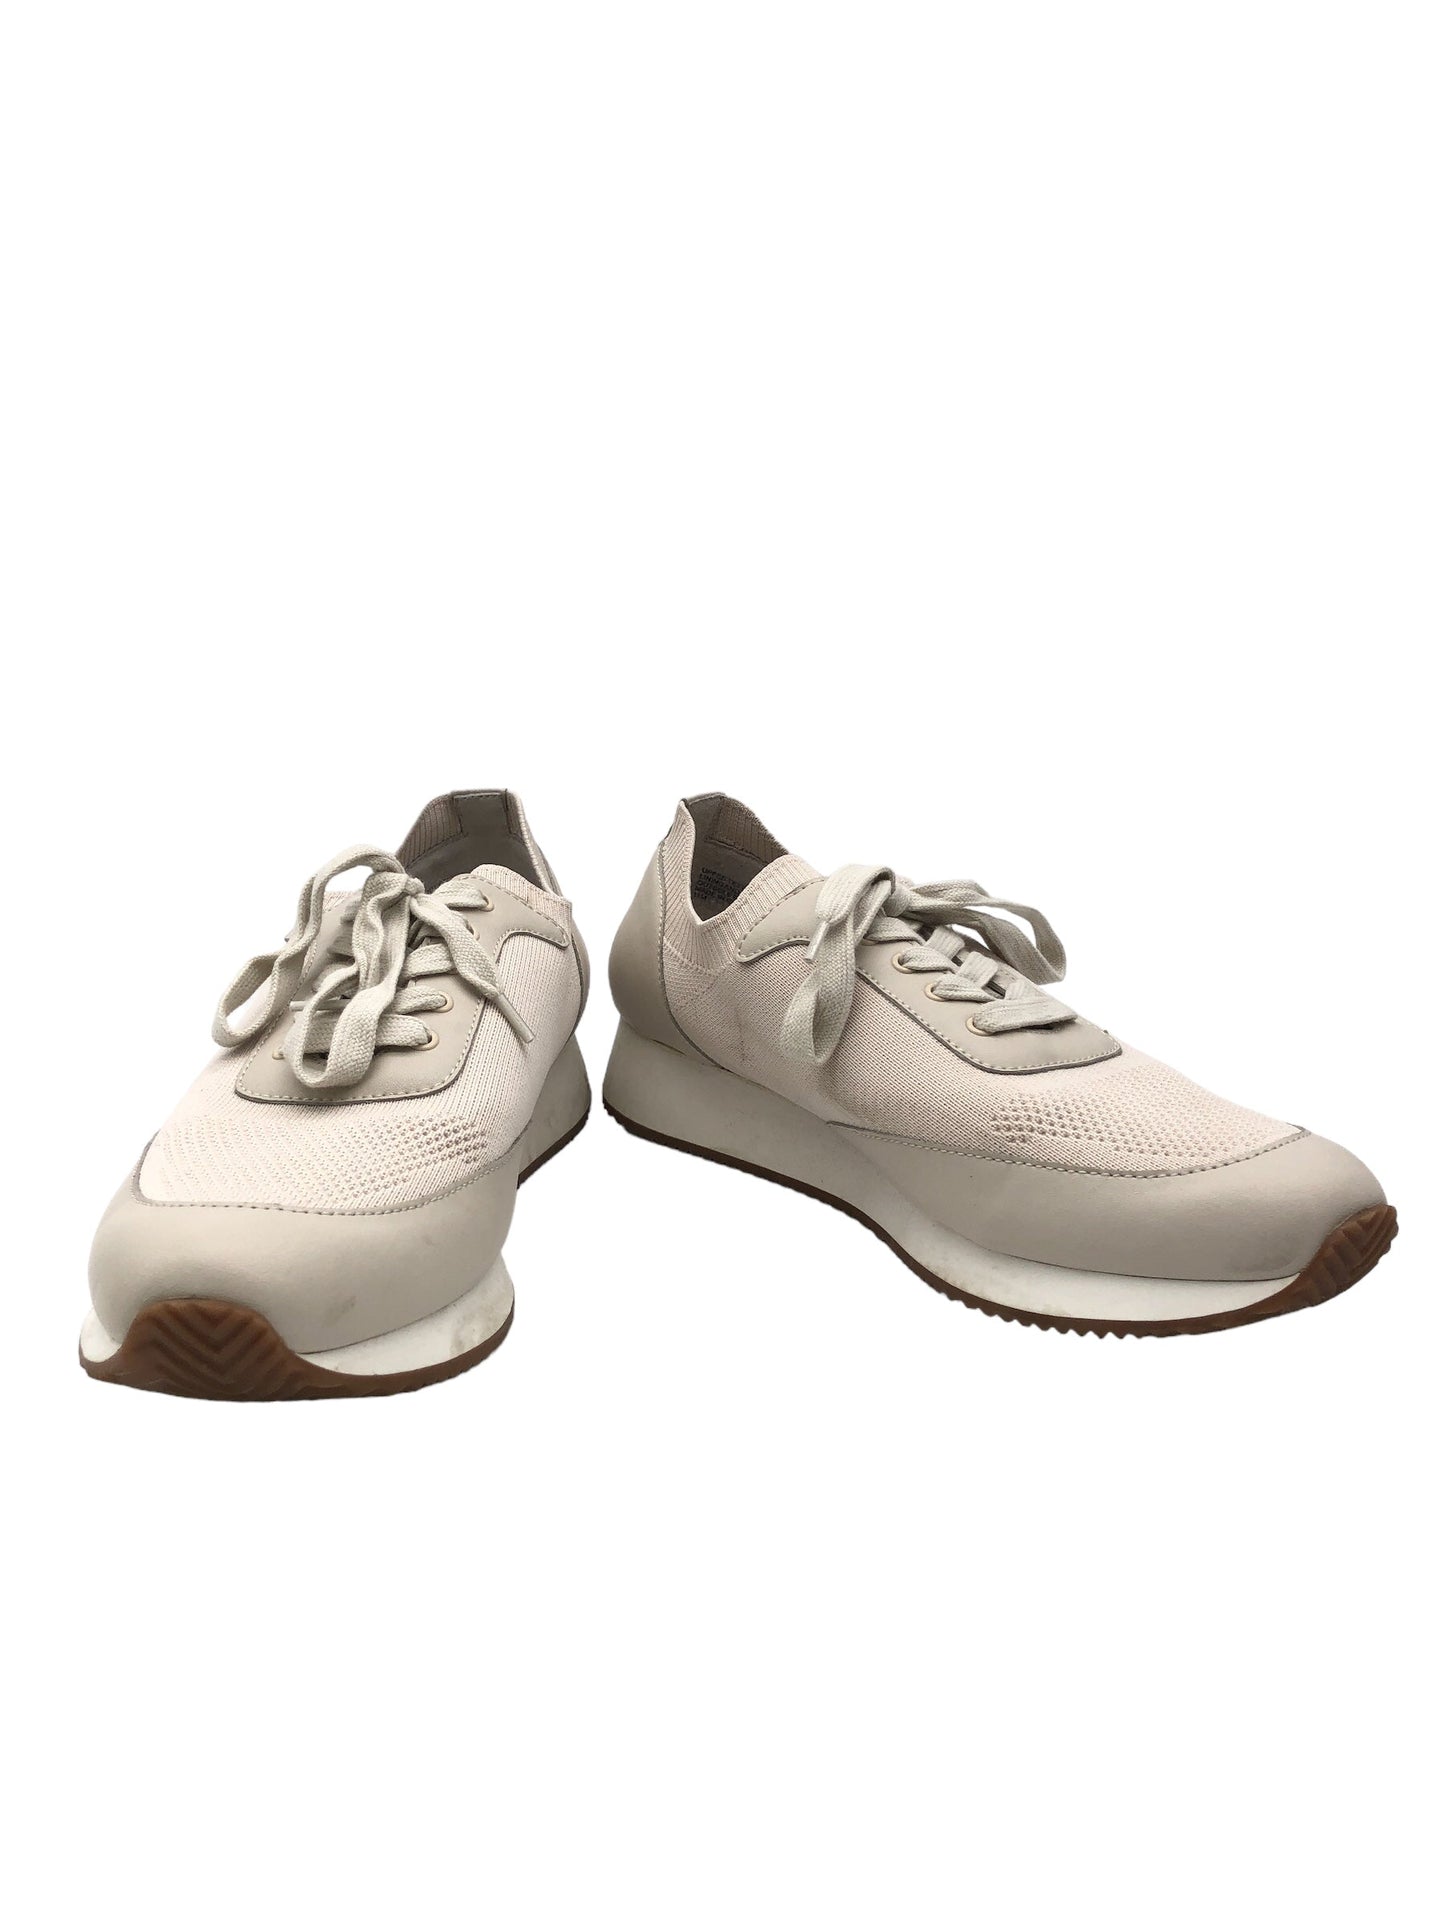 Tan Shoes Sneakers Banana Republic, Size 11